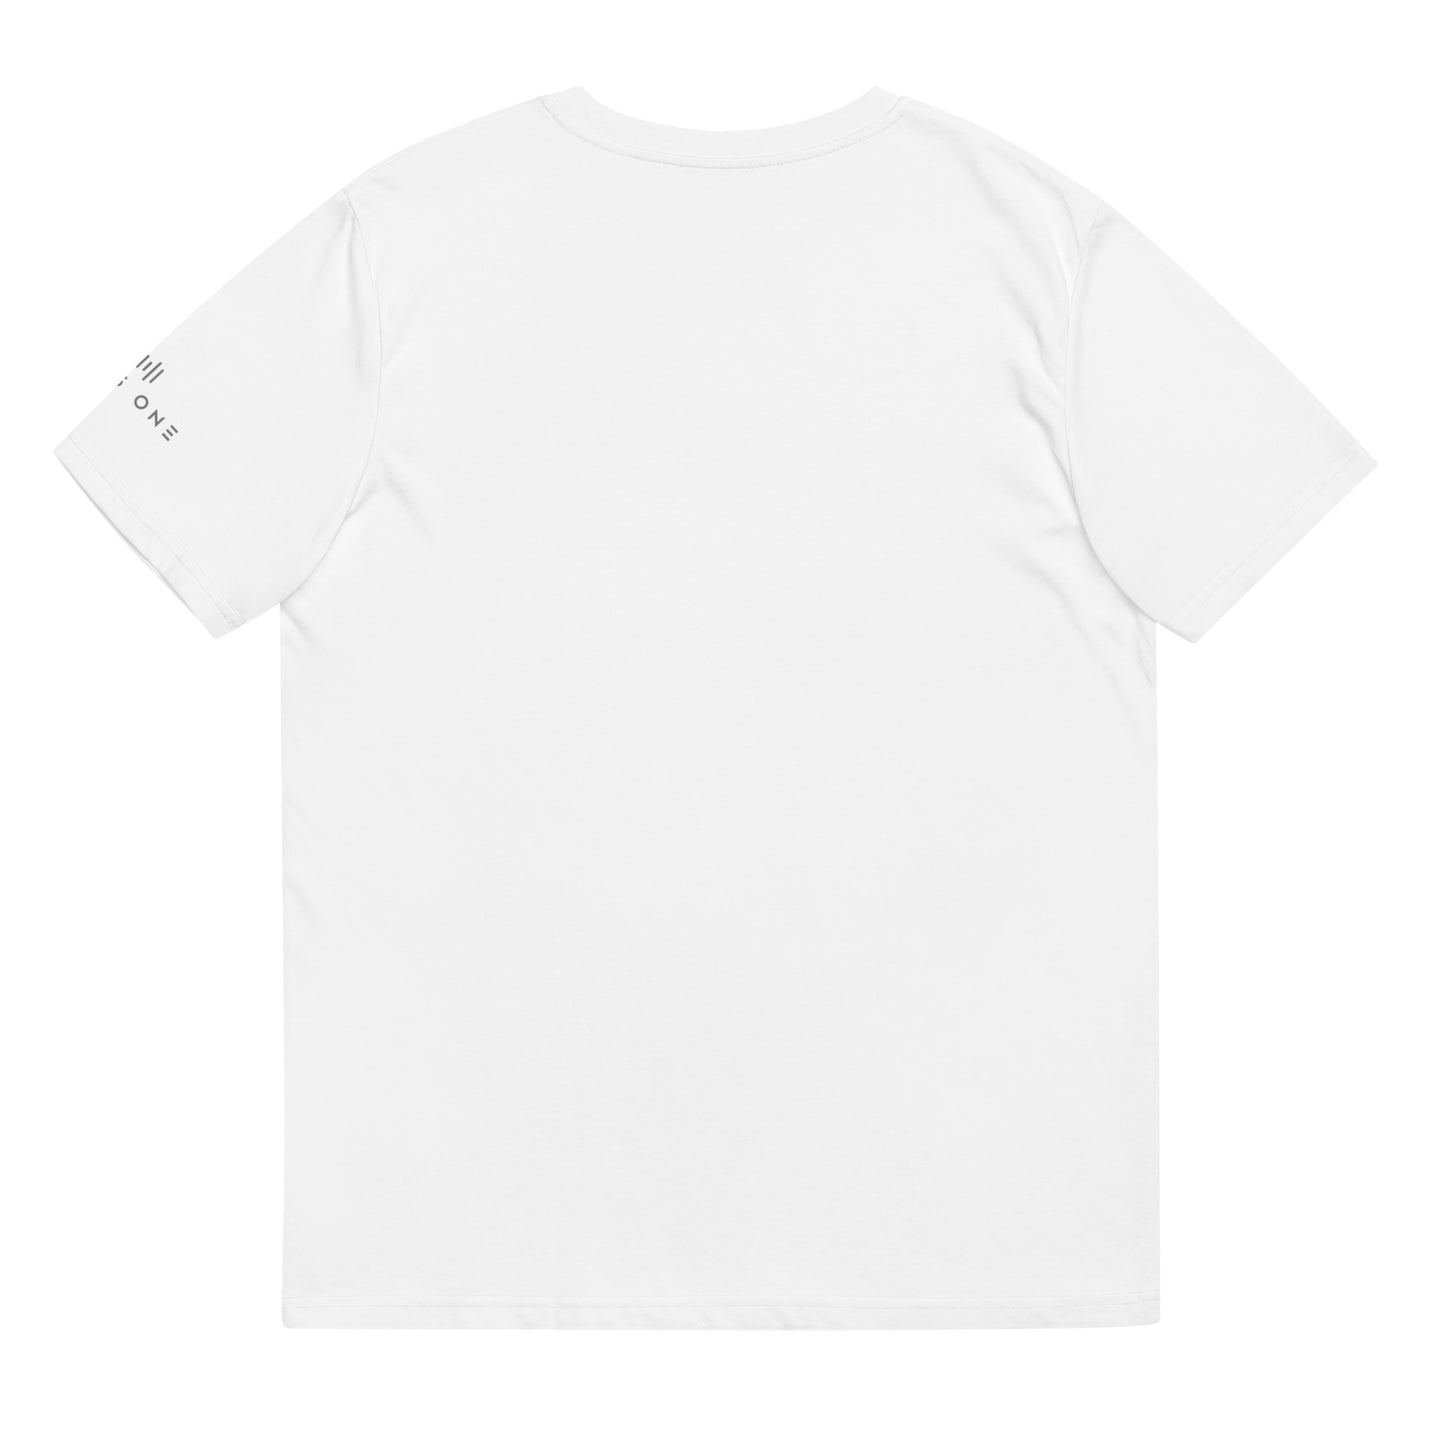 Signature Series (Nookie v5) Unisex organic cotton t-shirt MAIN FRONT PRINT